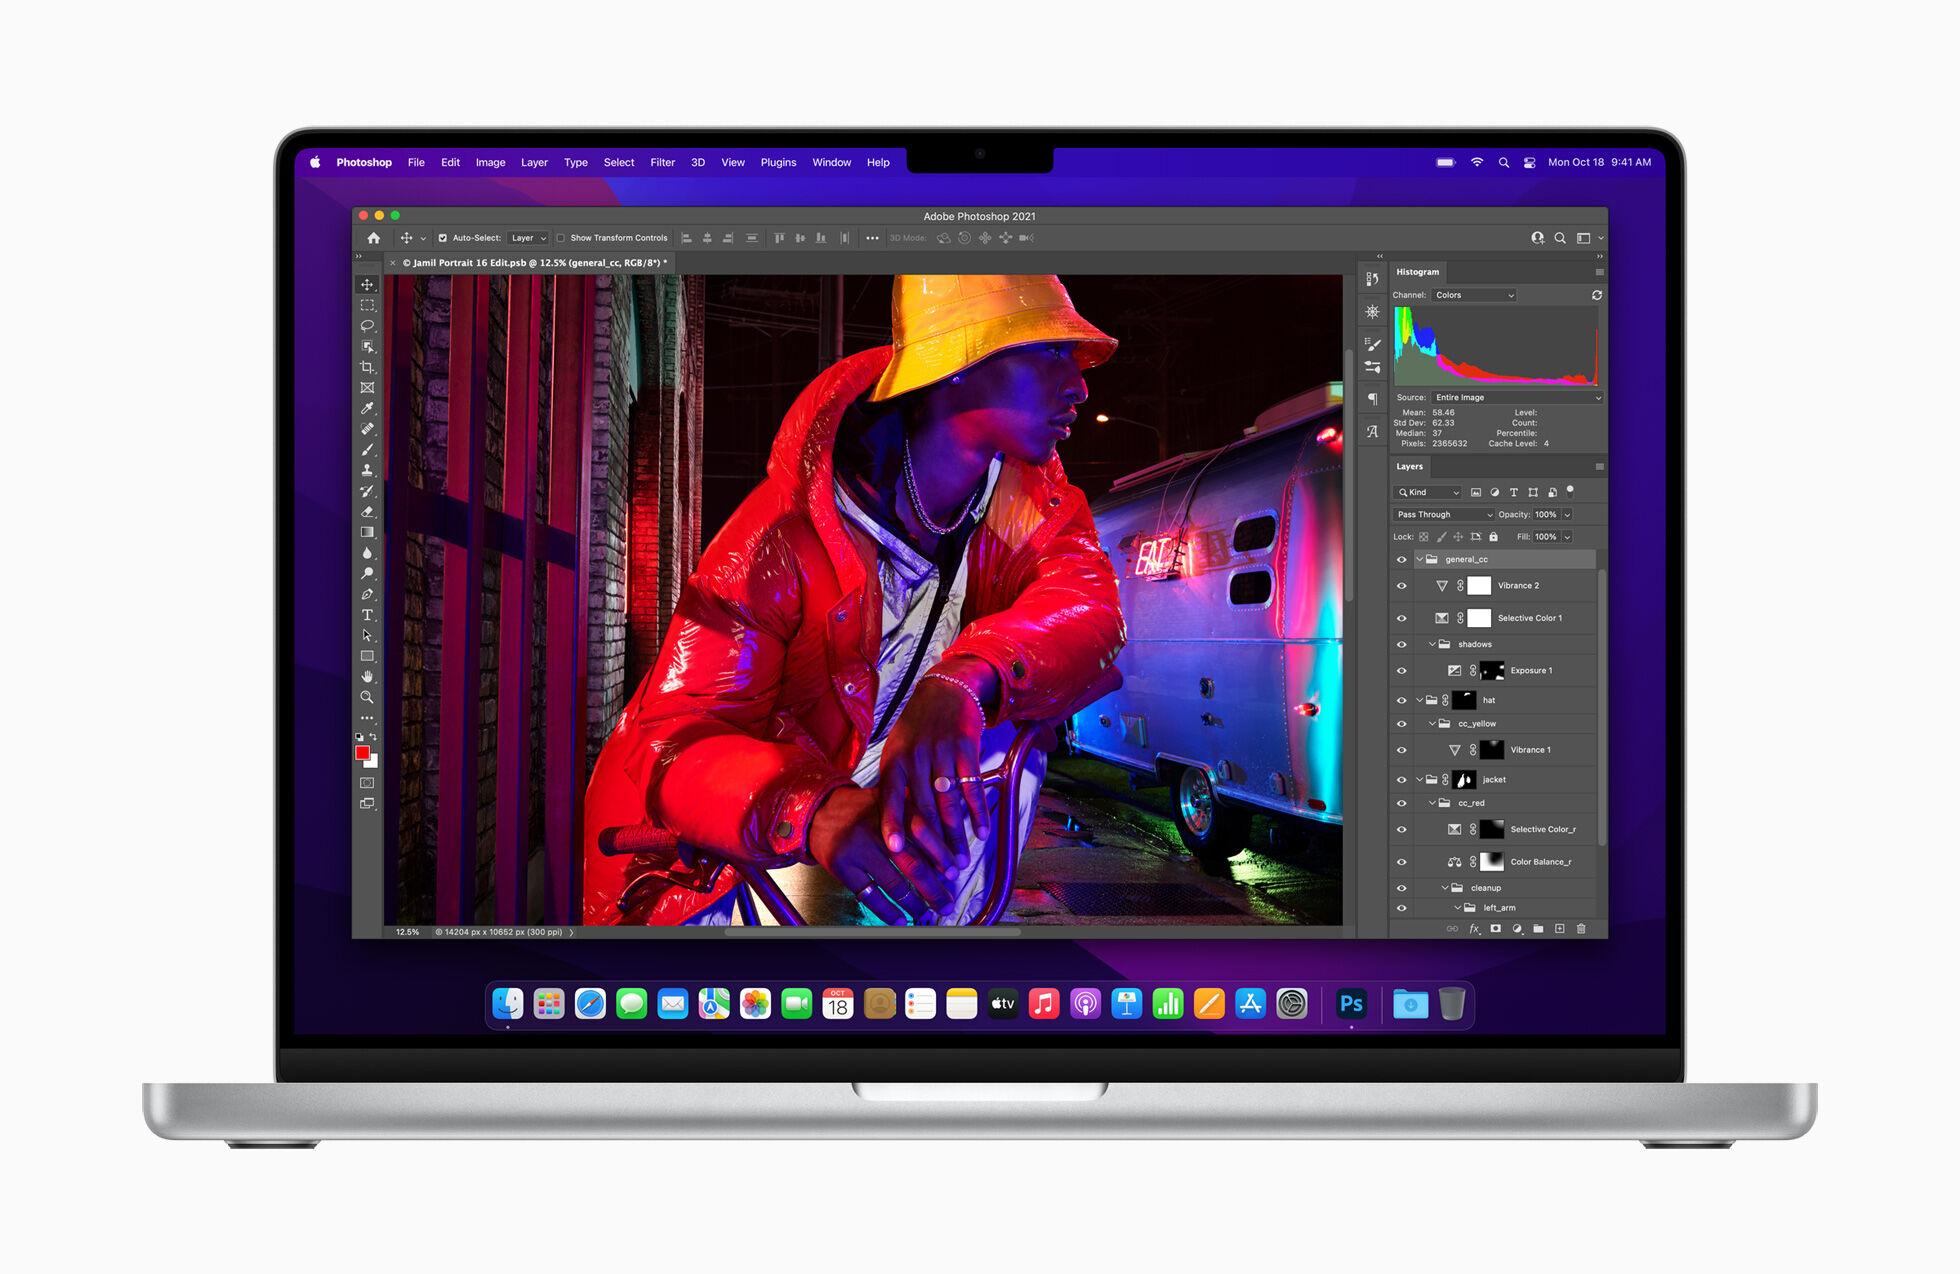 MacBook Pro photo editing